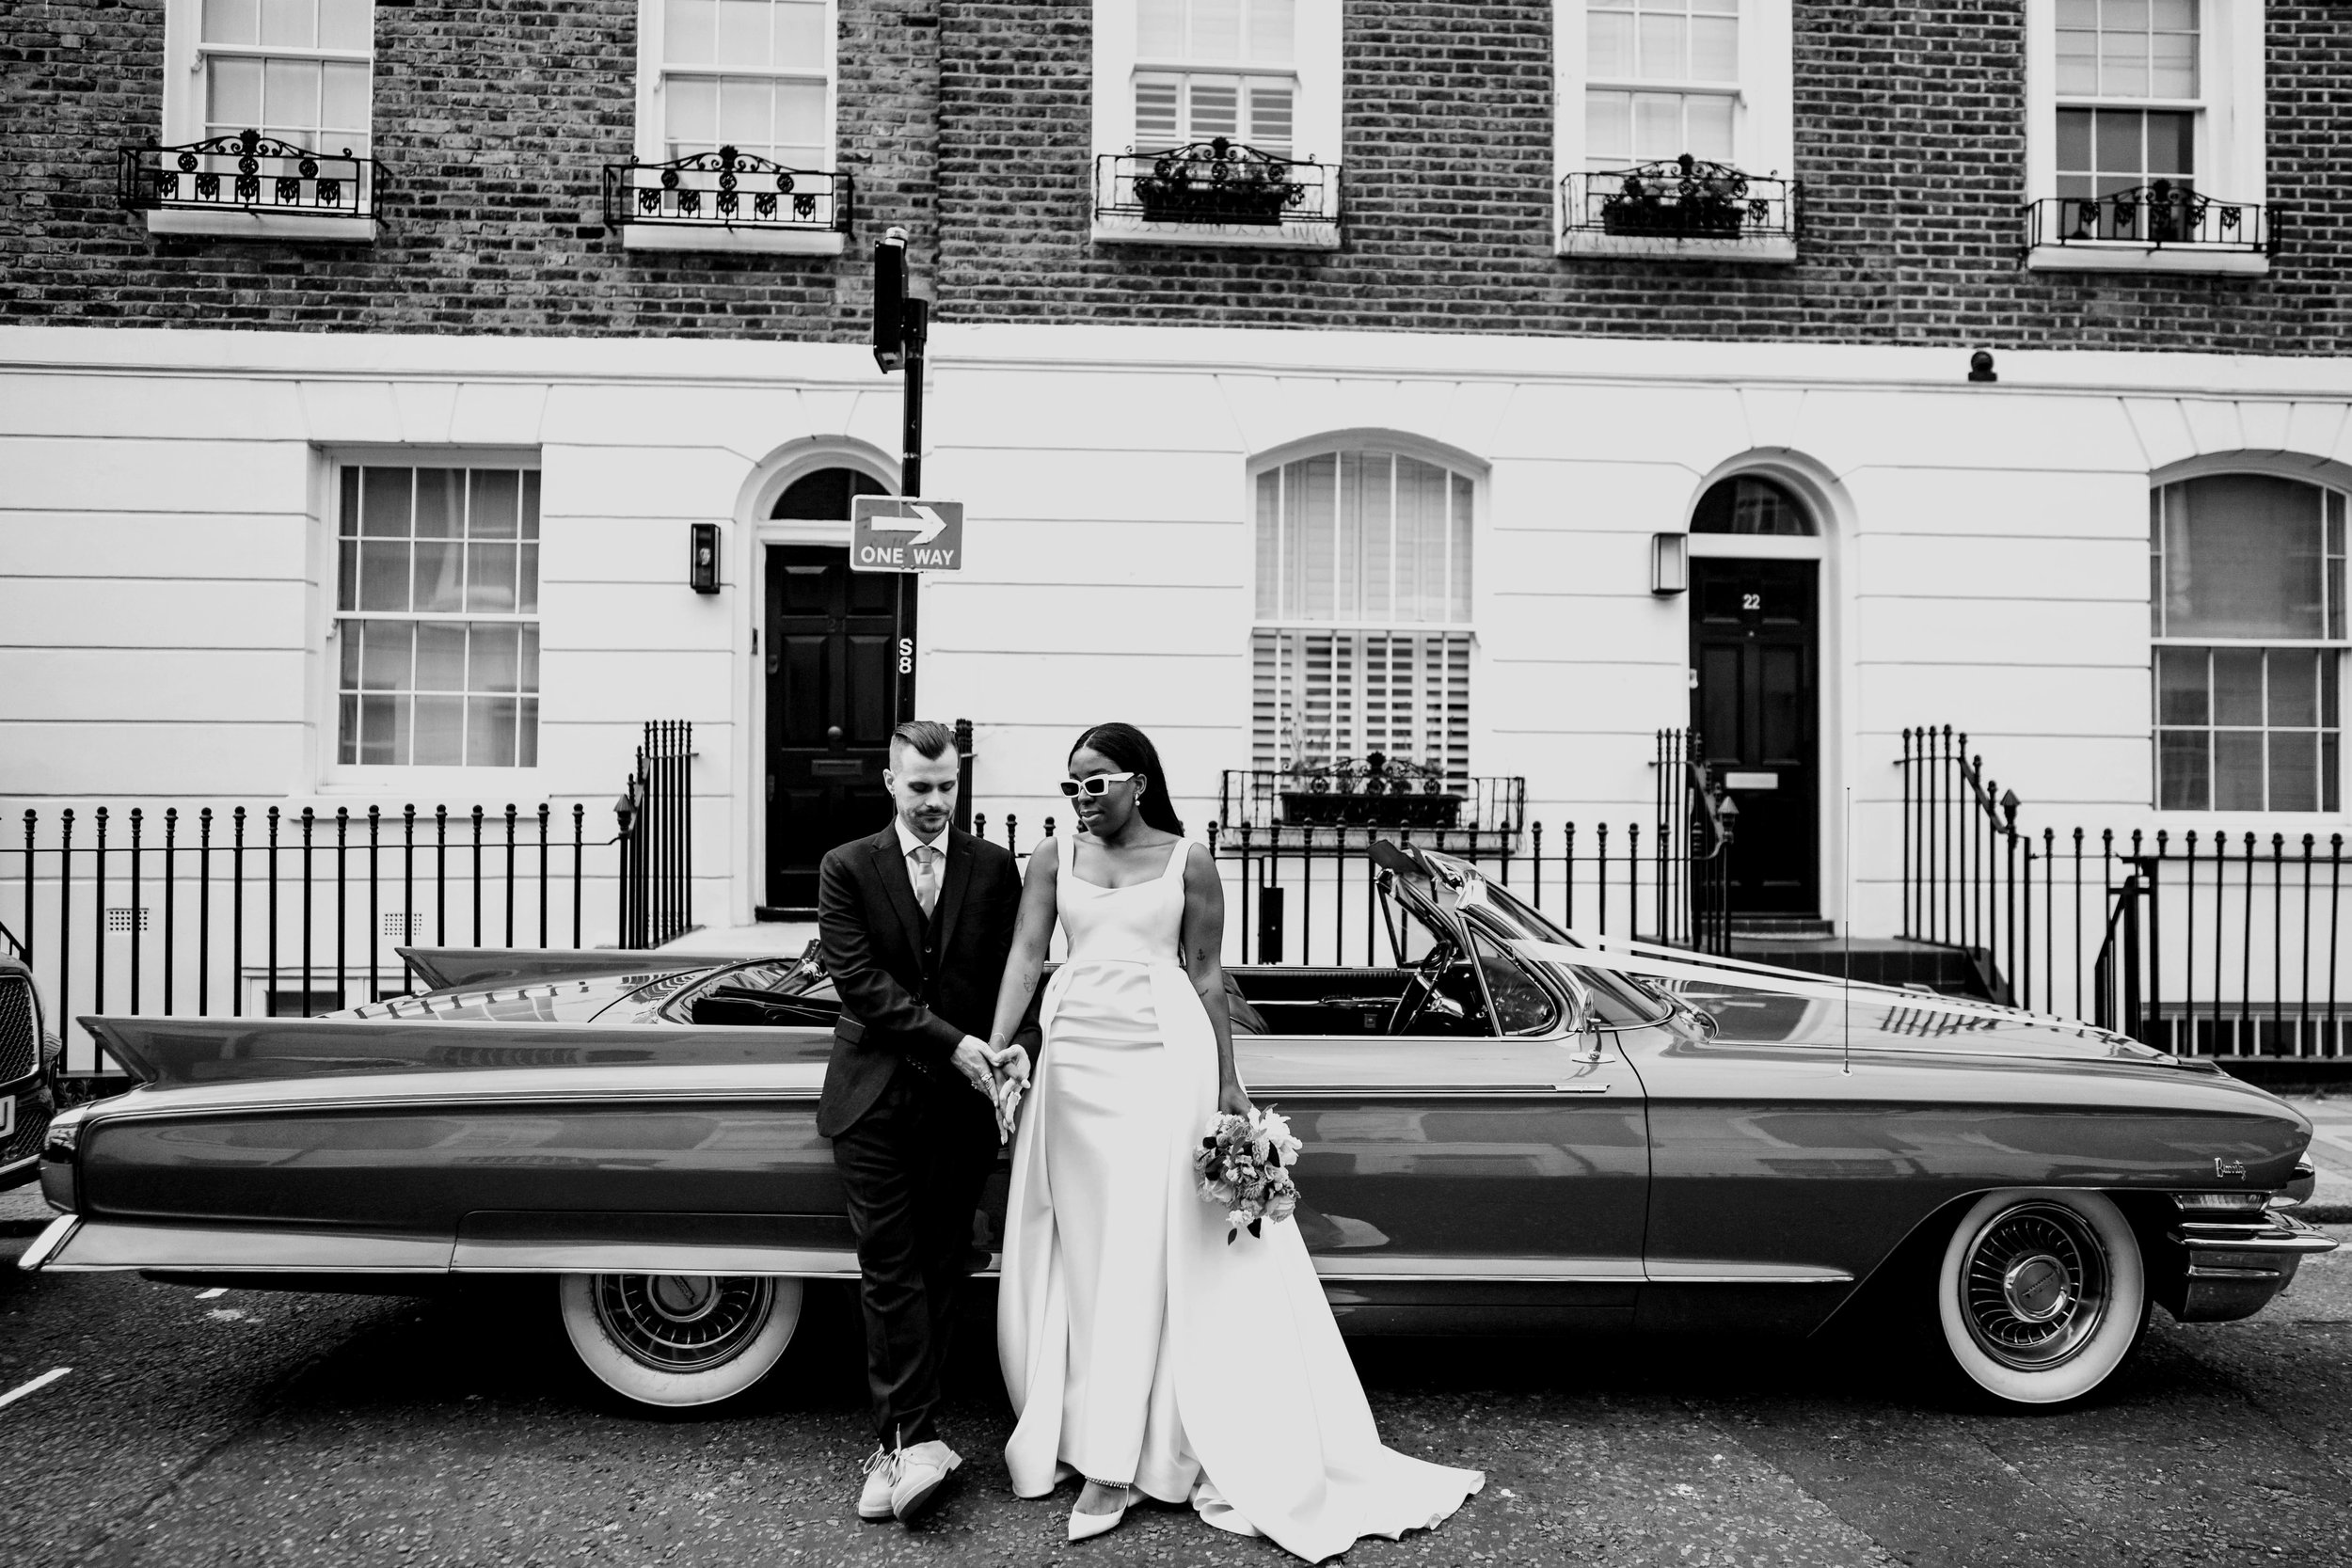 Beautiful Halfpenny London bride Remy wears the Ivory Dahlia dress | Wedding dresses by Halfpenny London